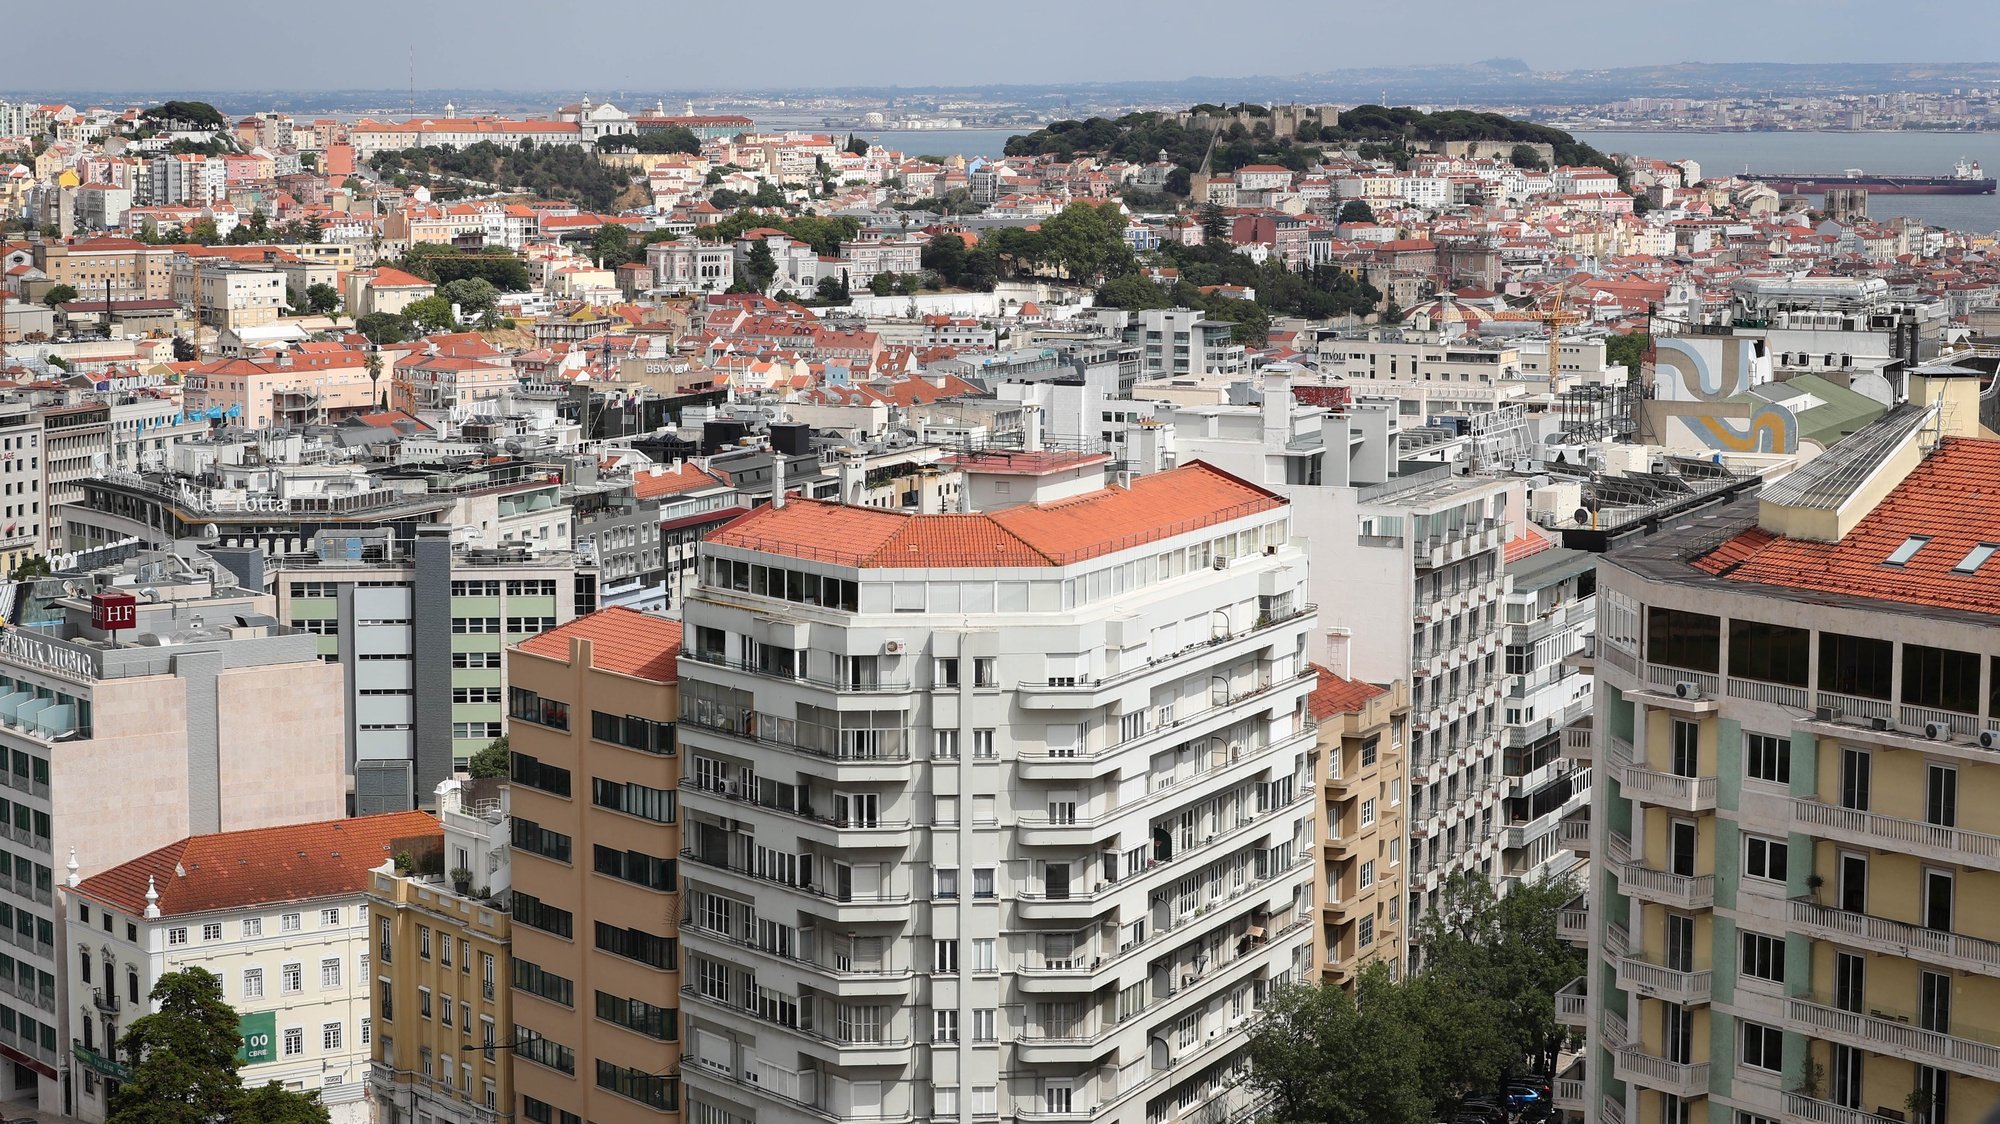 Vista da cidade de Lisboa, Lisboa, 27 de junho de 2019. ANTÓNIO COTRIM/LUSA